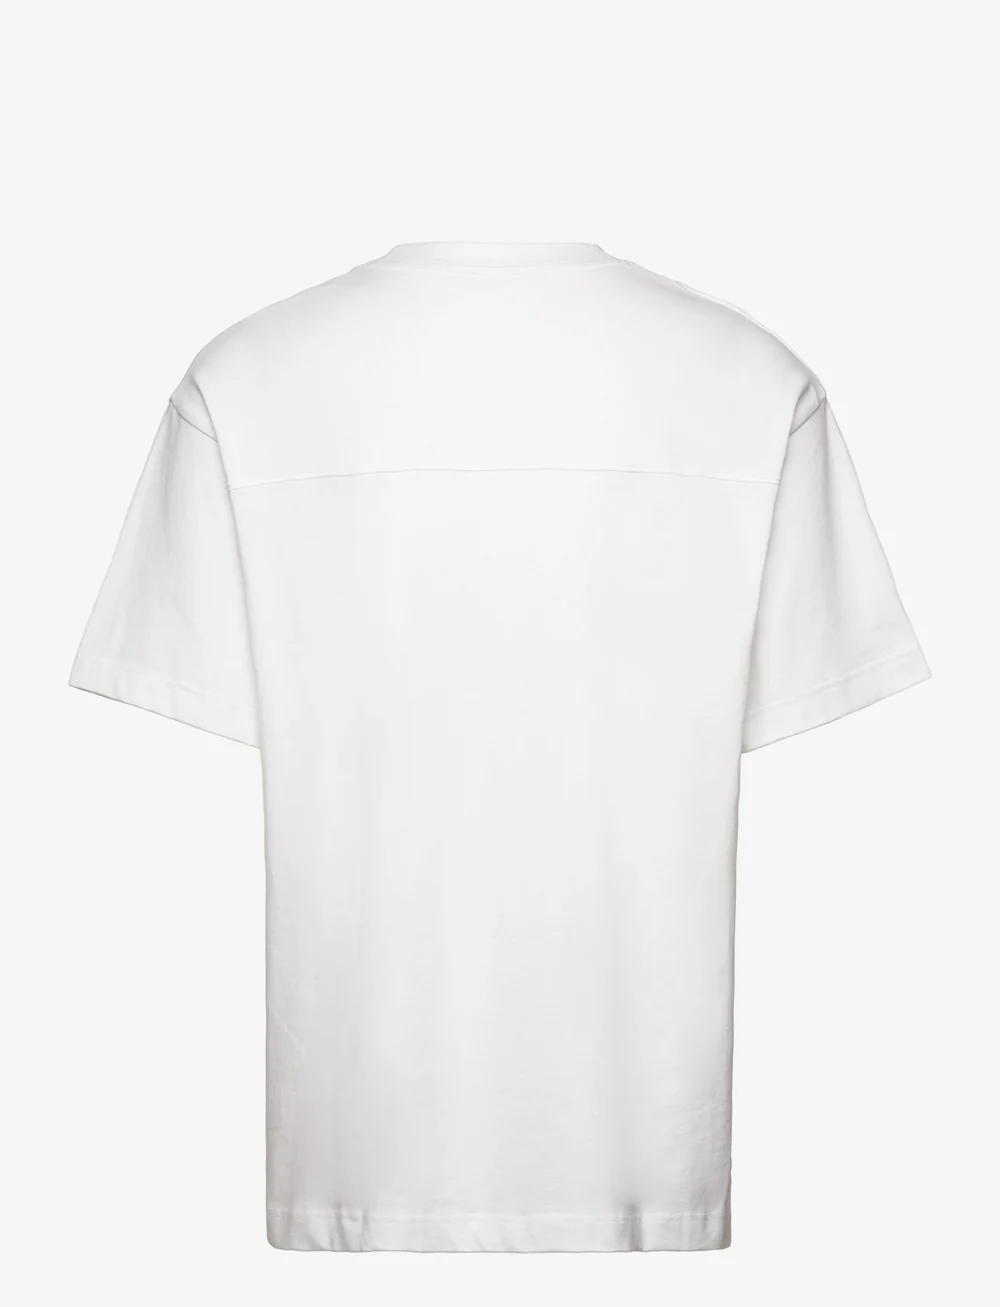 Calvin Klein Jeans Archival Monologo Tee – t-shirts – shop at Booztlet